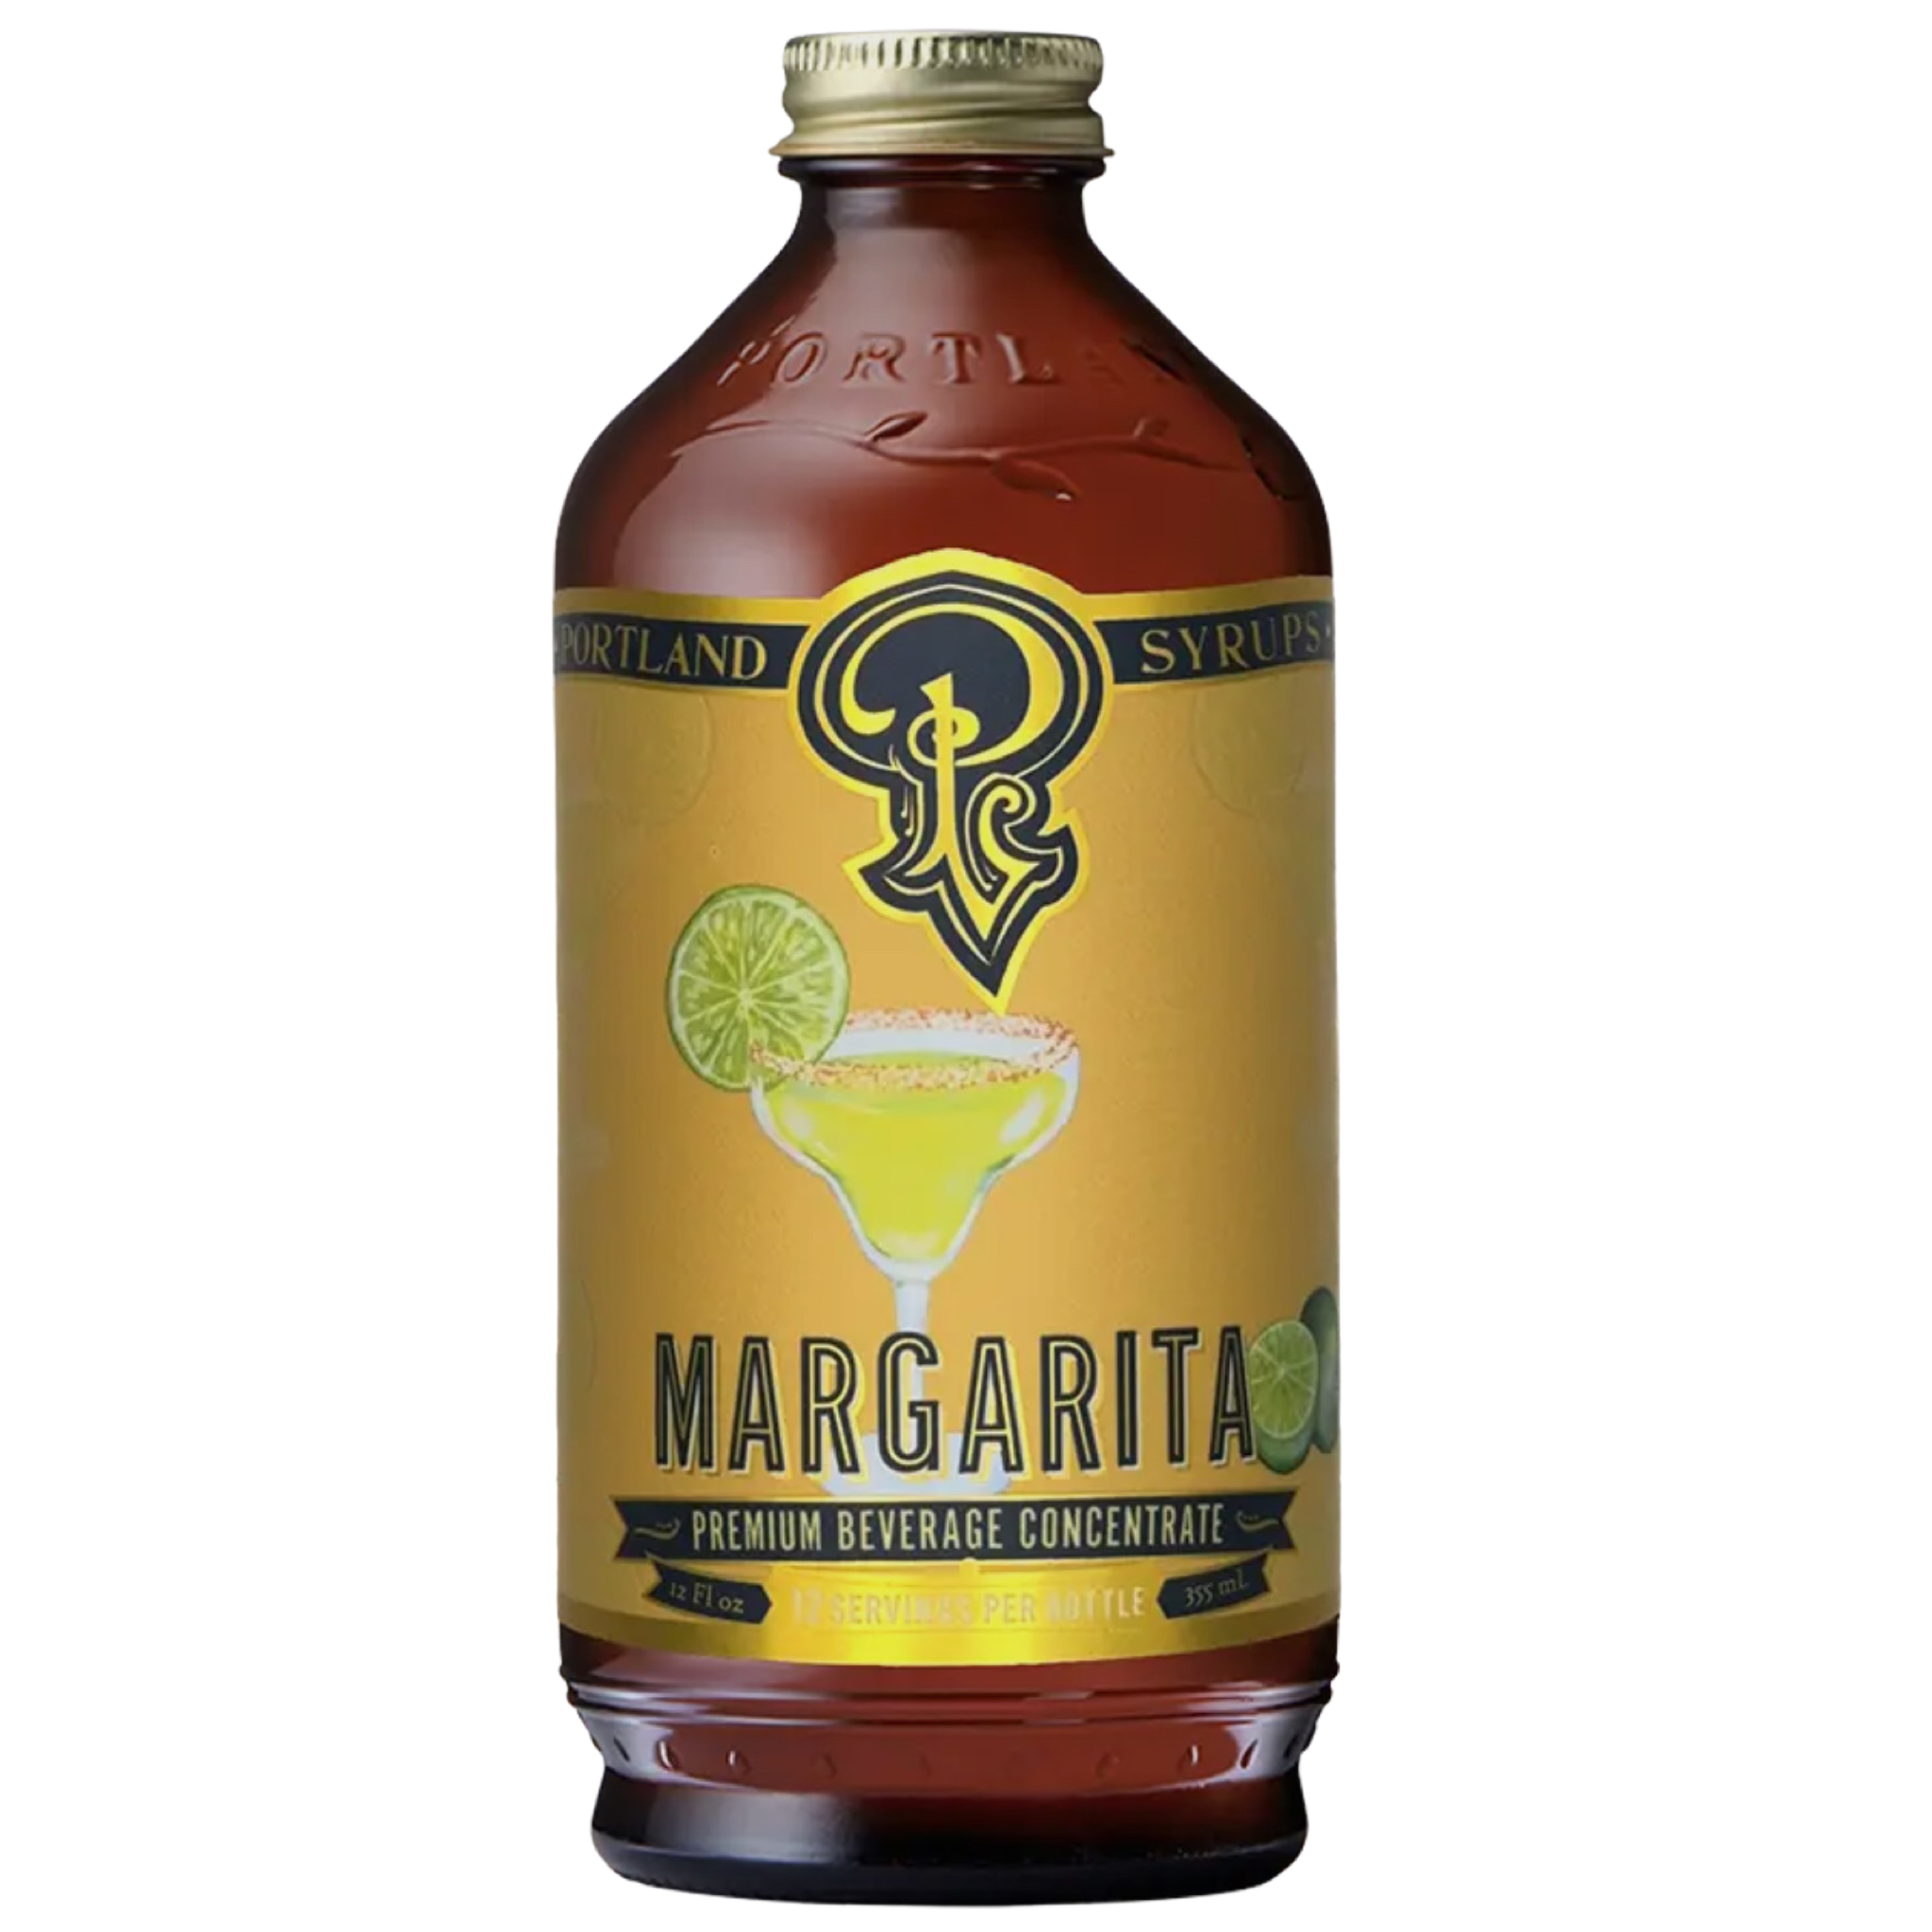 Margarita syrup